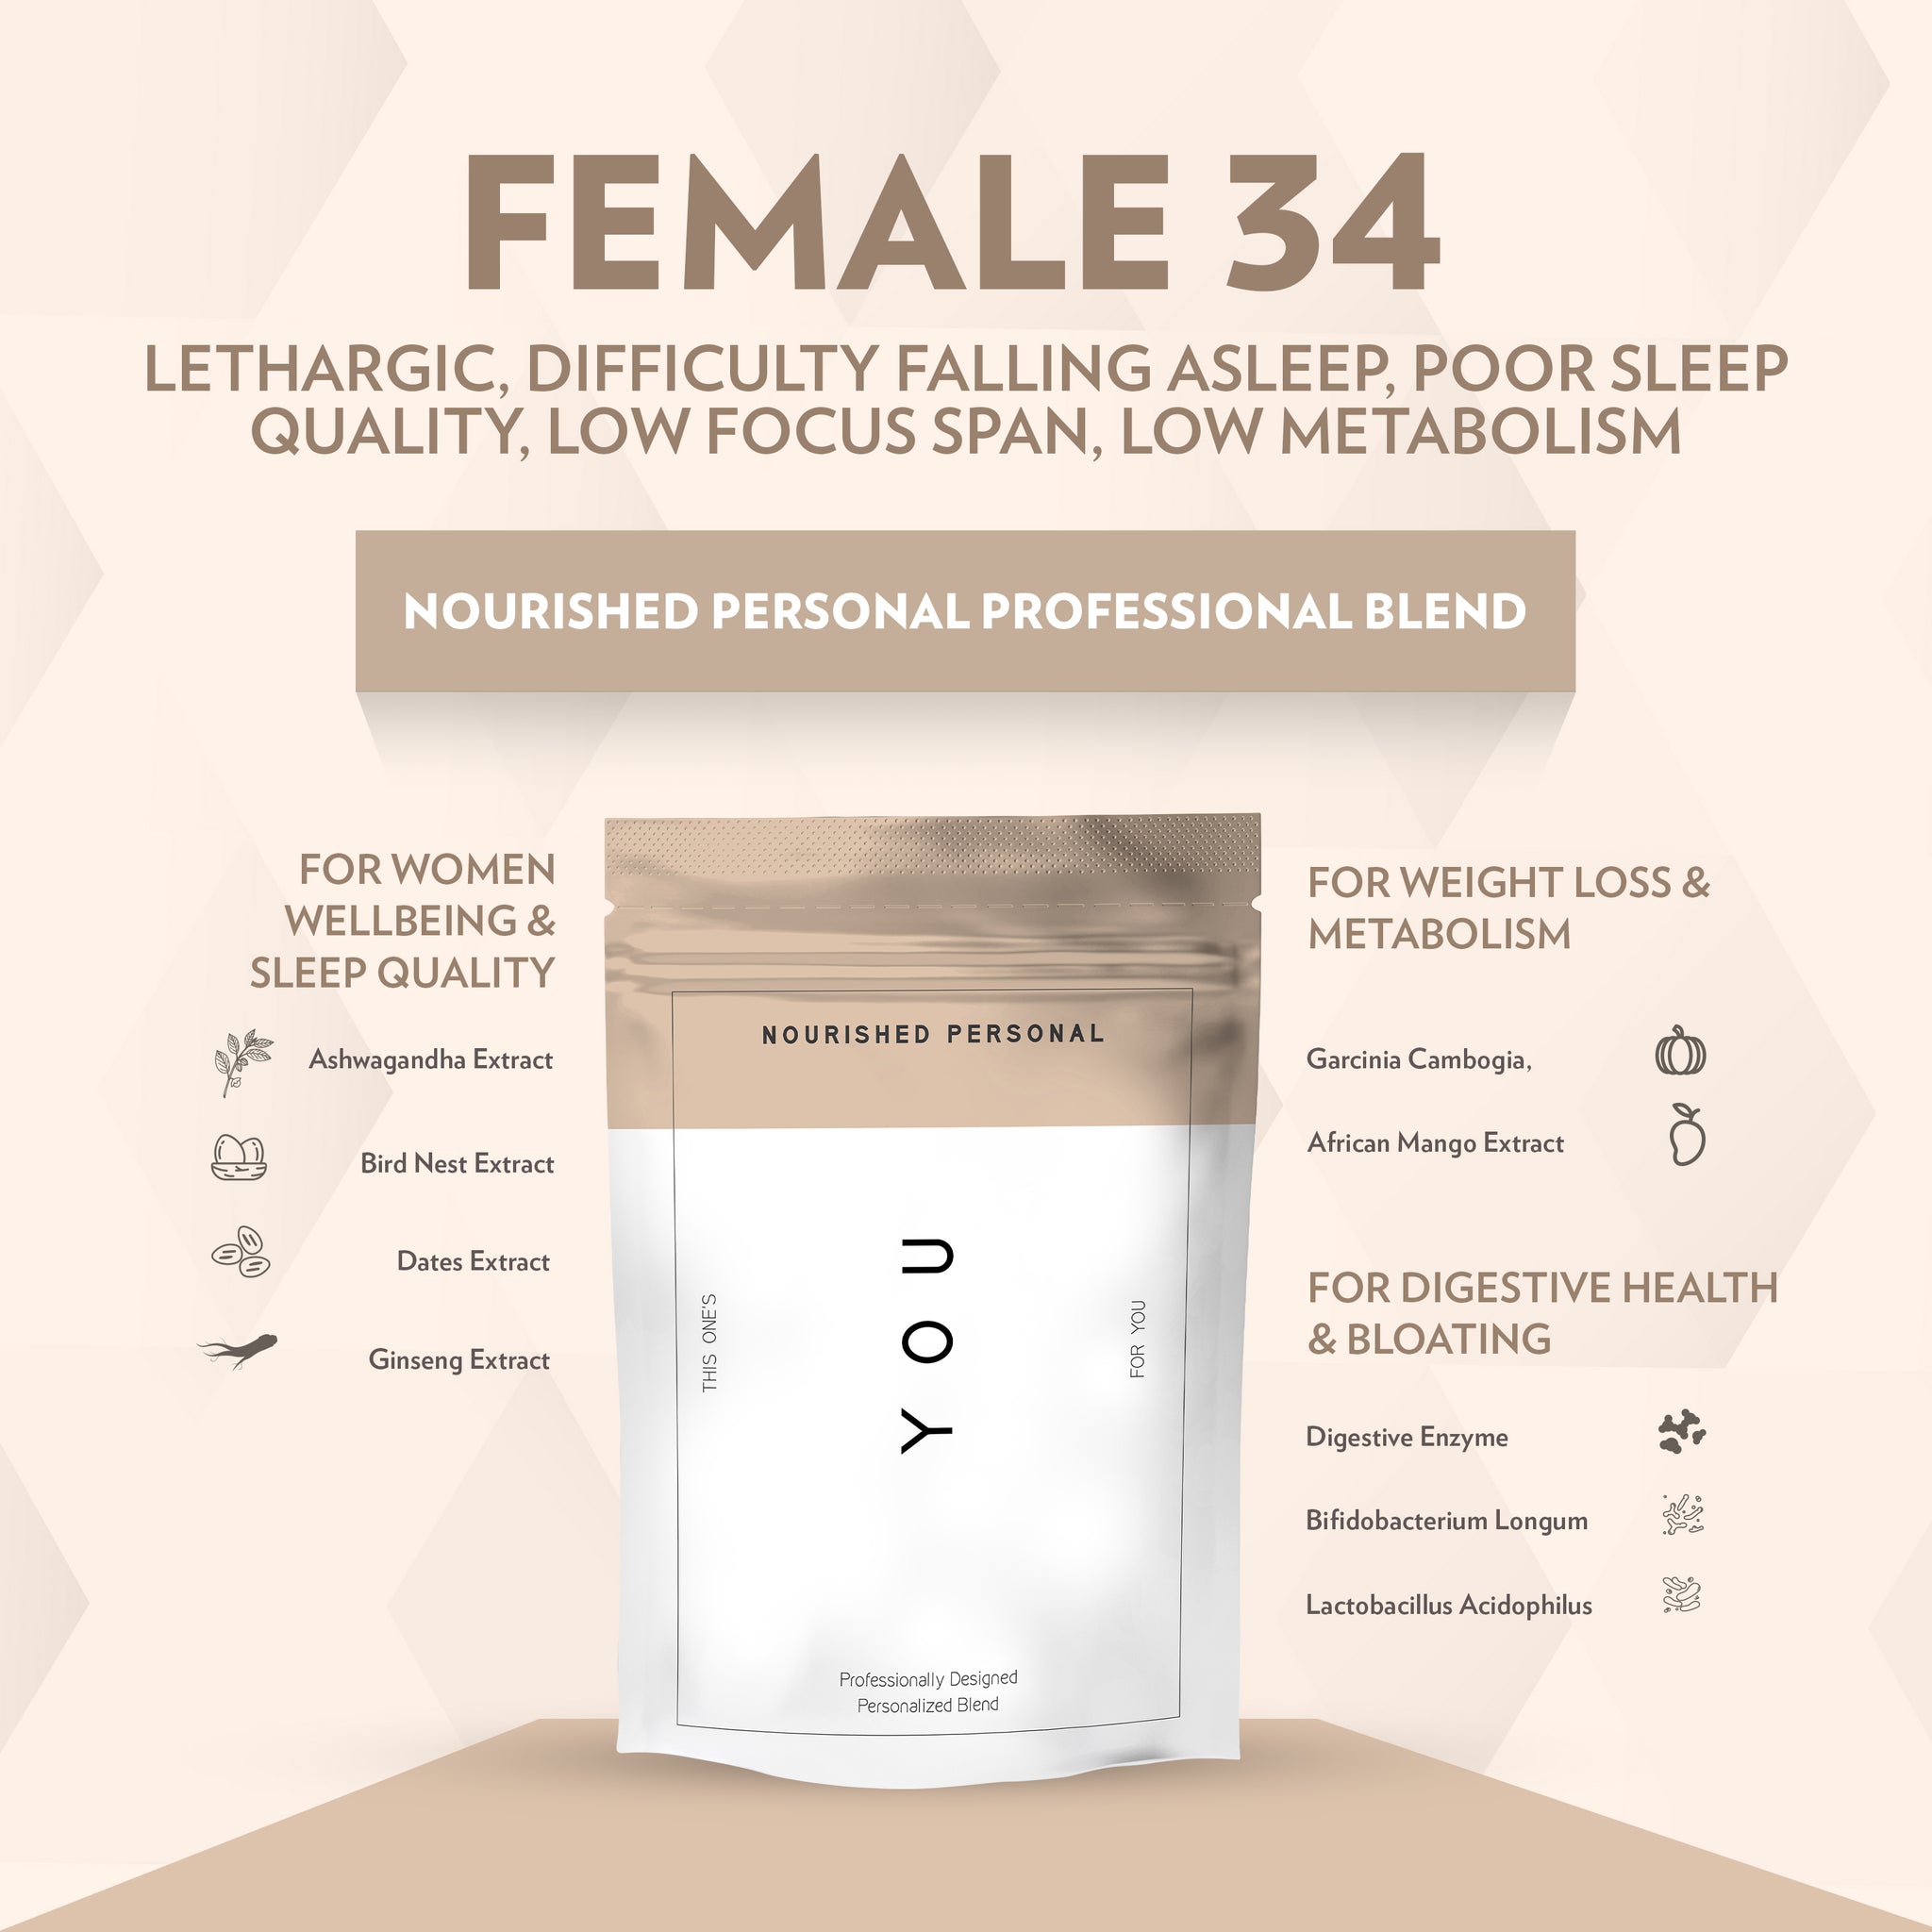 Case Study 37: Female, 34 -  Lethargic, Difficulty Falling Asleep, Poor Sleep Quality, Low Focus Span, Low Metabolism